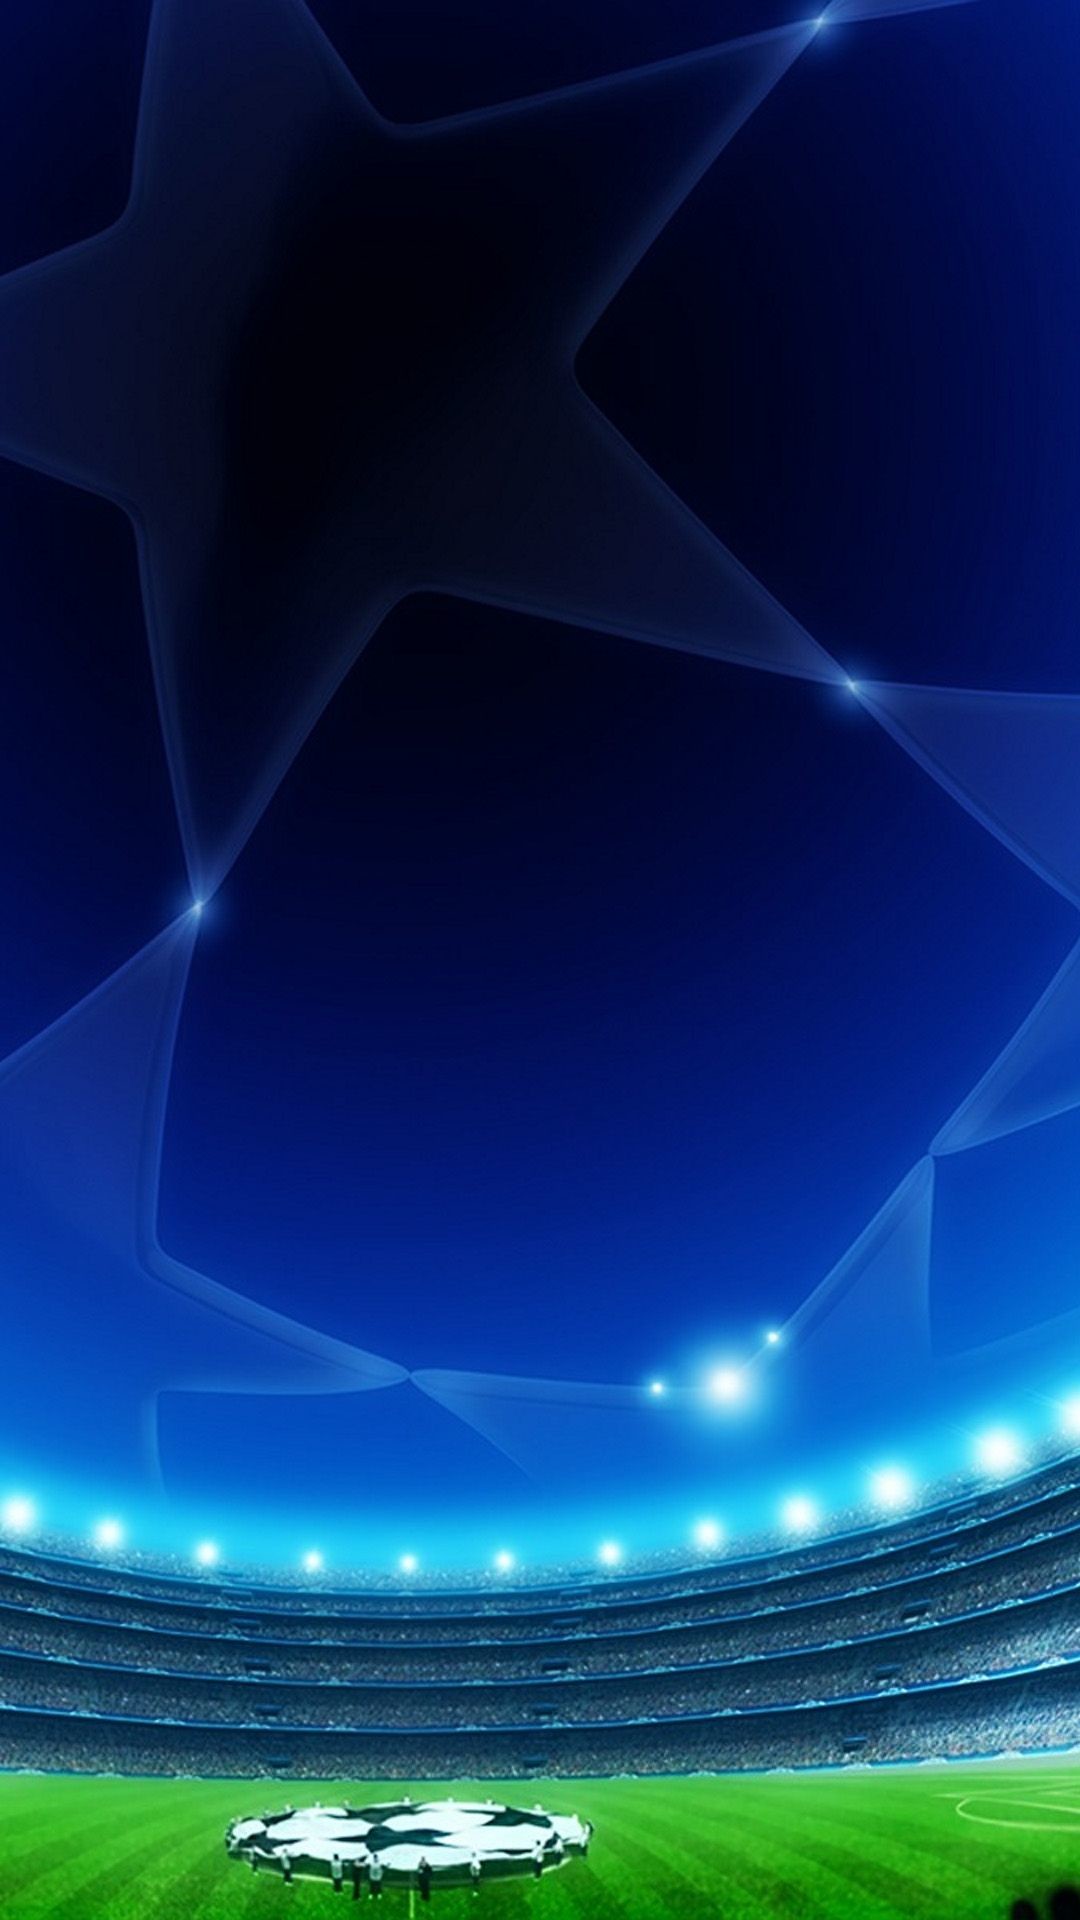 1080x1920 Football galaxy wallpapers top free football galaxy backgrounds jpg   Soccer stadium blue wallpaper football hd